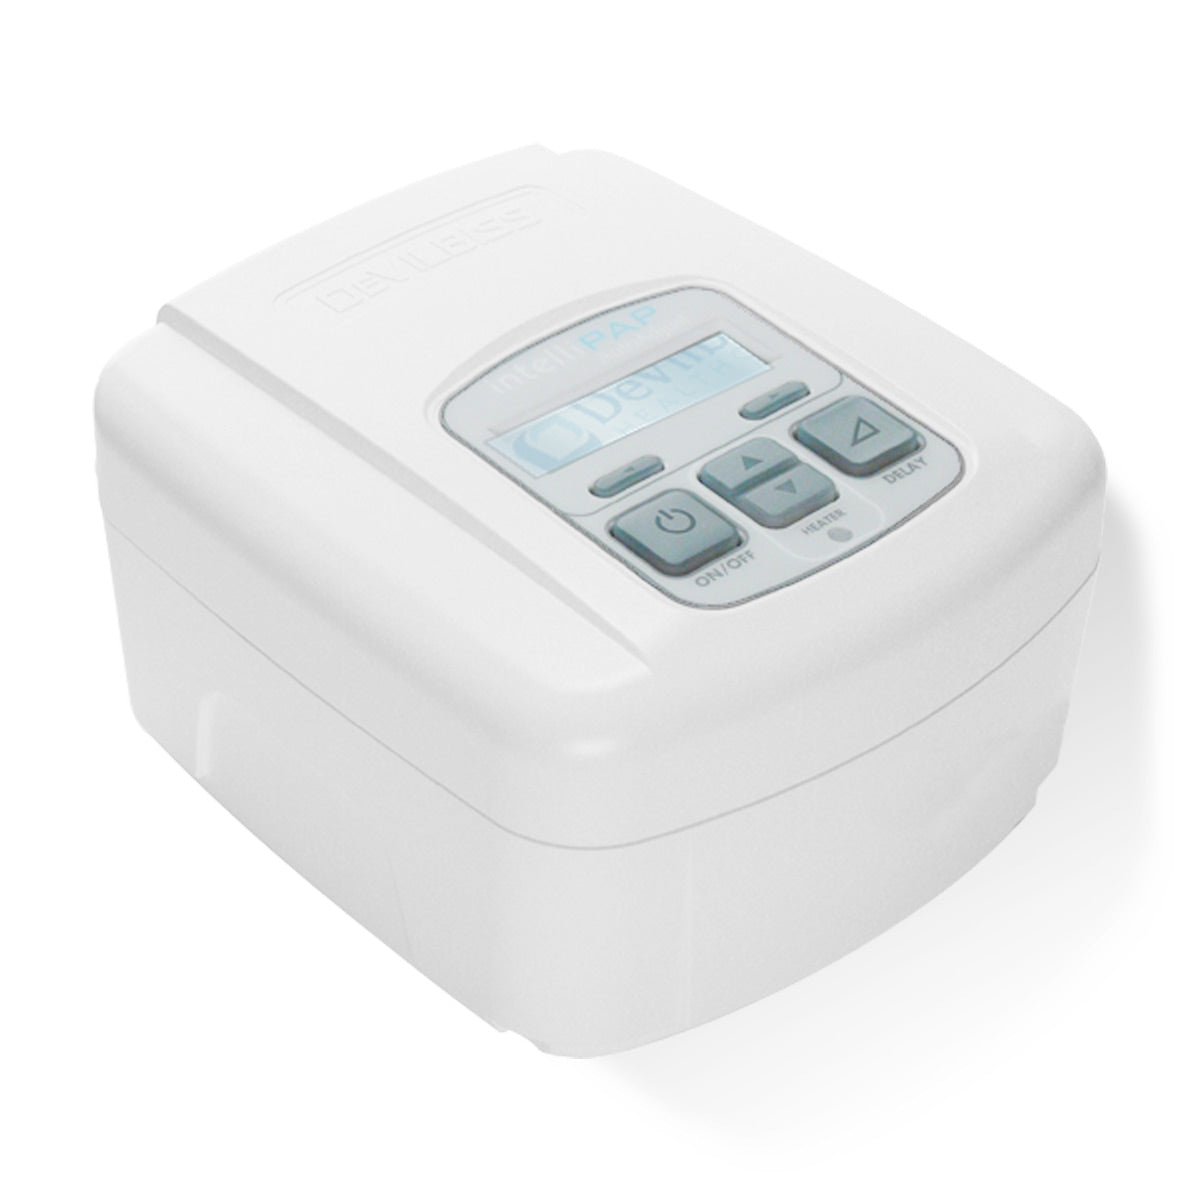 IntelliPAP Standard CPAP Machine - CERTIFIED PRE-OWNED